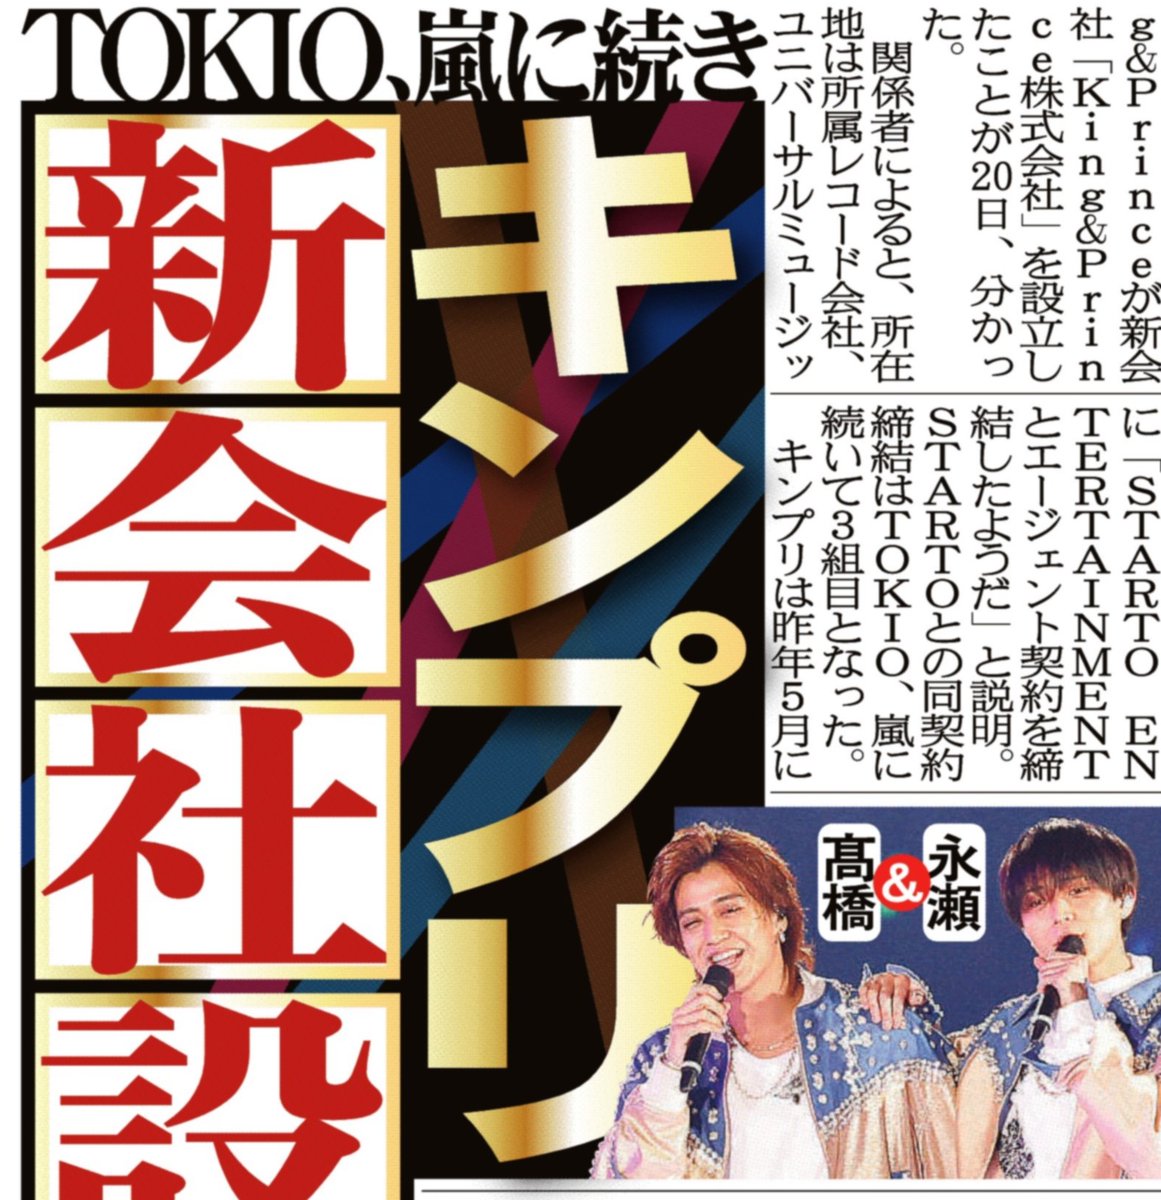 King&Princeが新会社「King&Prince株式会社」を設立。所在地は所属レコード会社、#ユニバーサルミュージック と同じで、本紙の取材に「#STARTOENTERTAIMENT とエージェント契約を締結したようだ」と説明。STARTOとの同契約締結は #TOKIO、#嵐 に続いて３組目となった。
#キンプリ